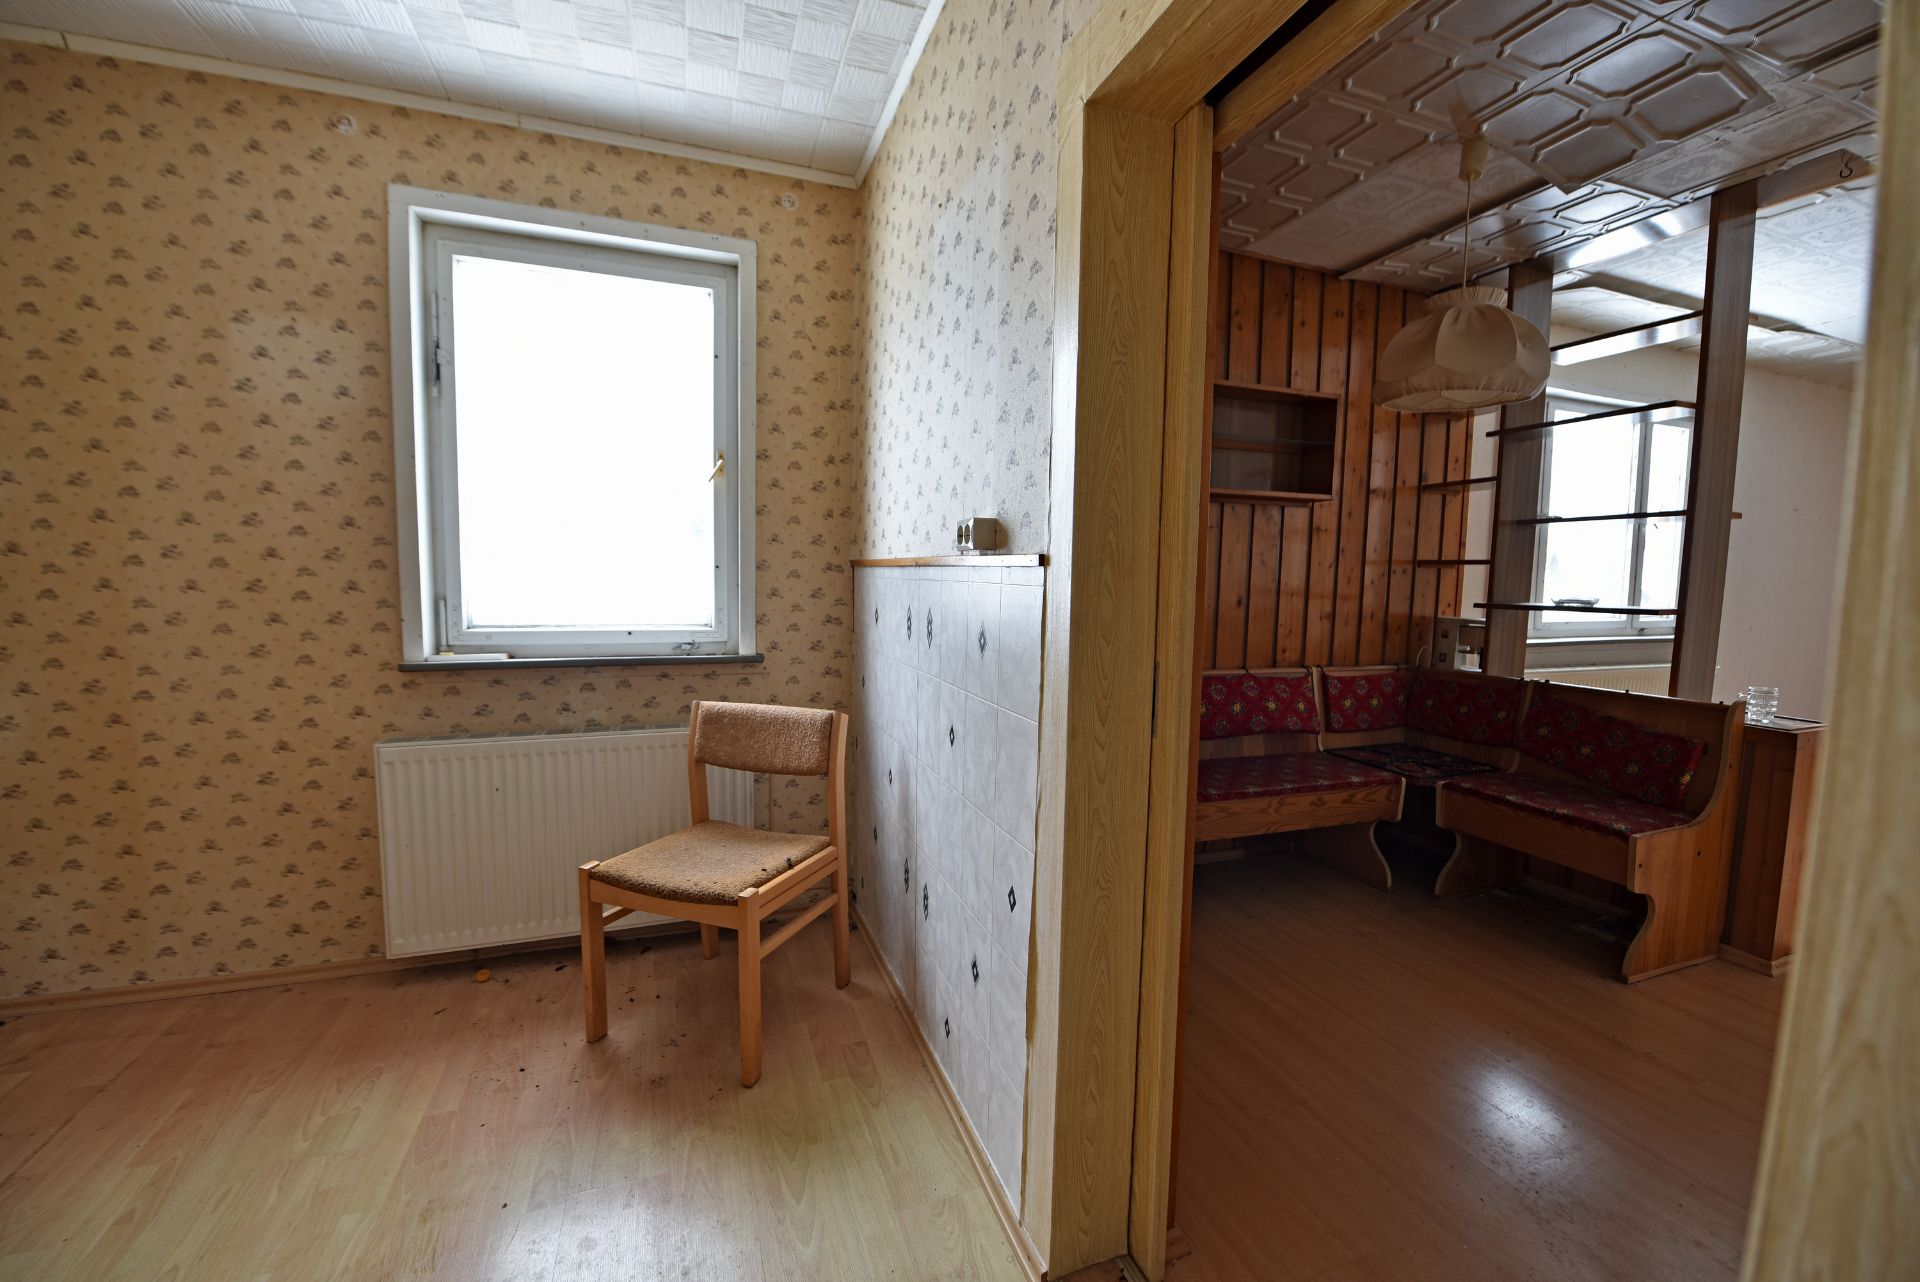 LARGE MULTI APARTMENT HOUSE IN KLINGENTHAL, GERMANY - Bild 41 aus 90